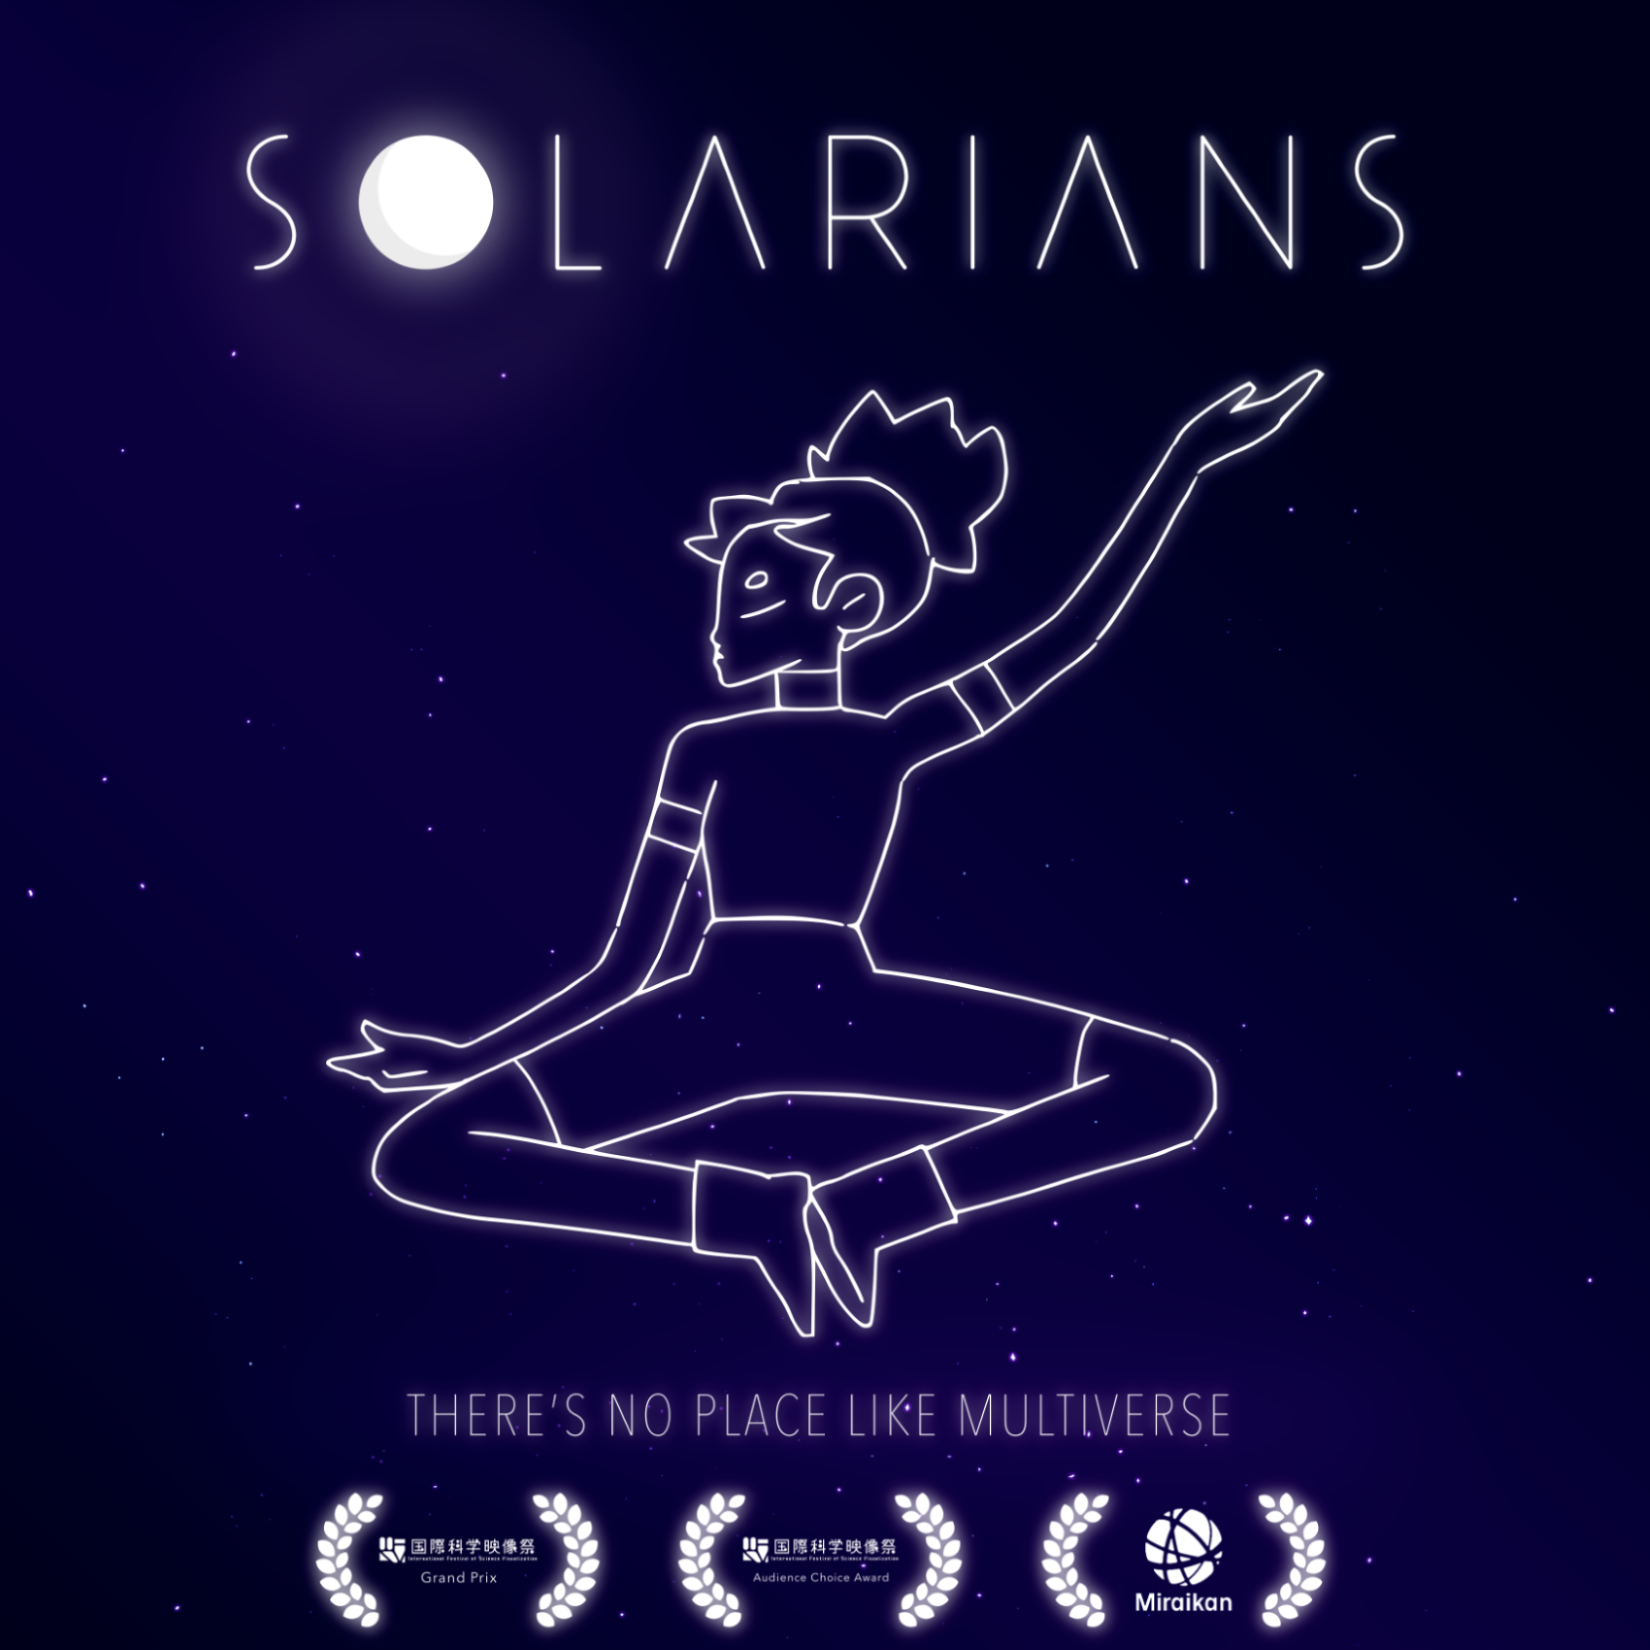 Solarians logo